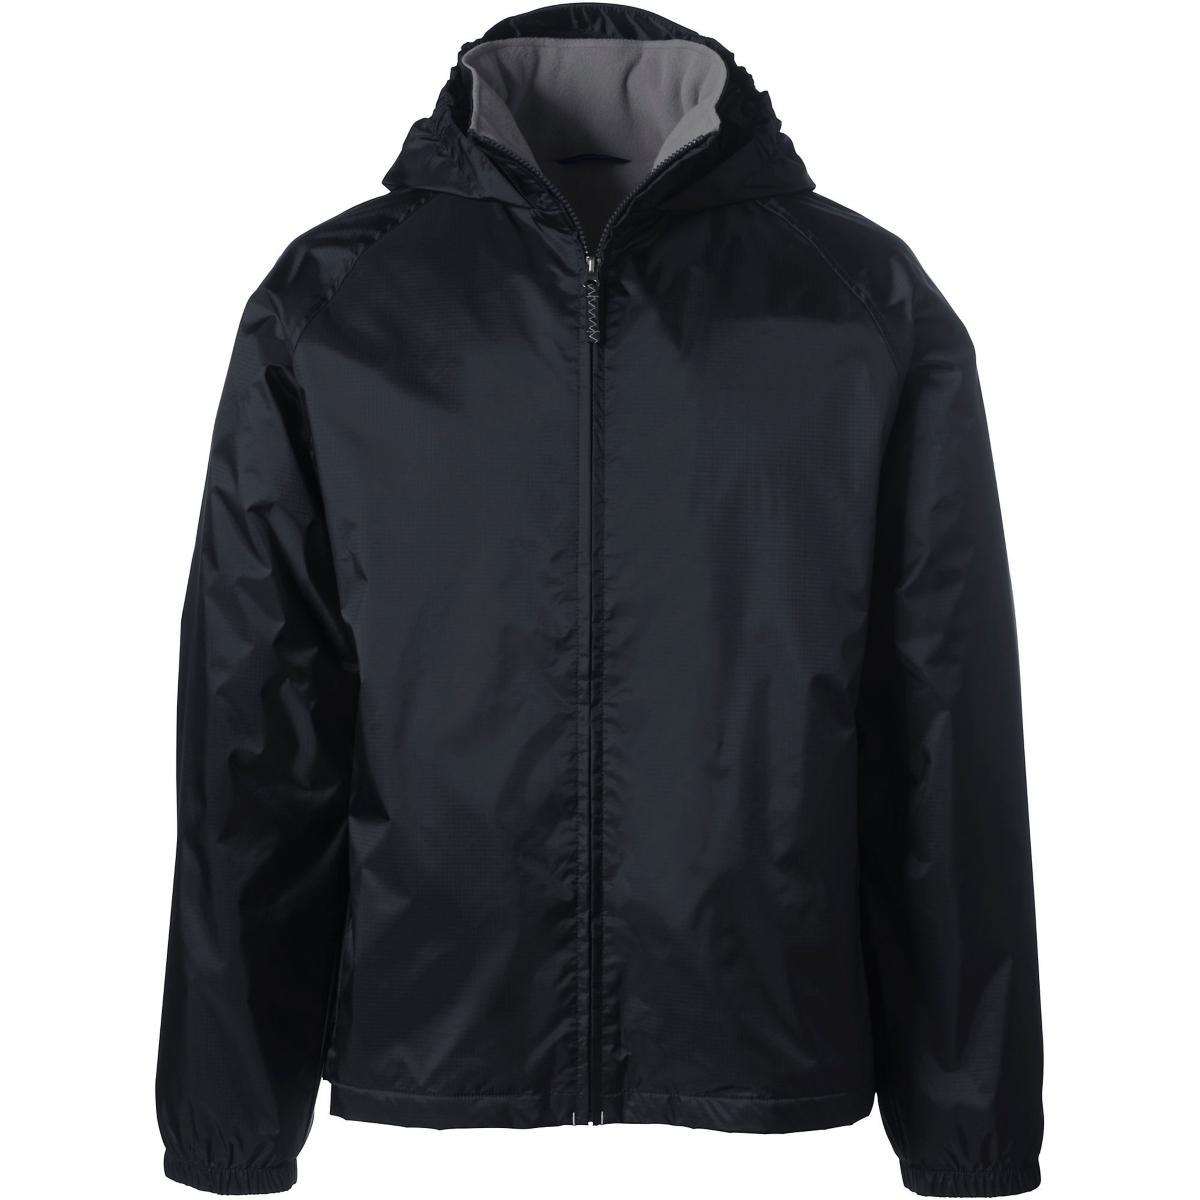 School Uniform Men's Fleece Lined Rain Jacket - Black